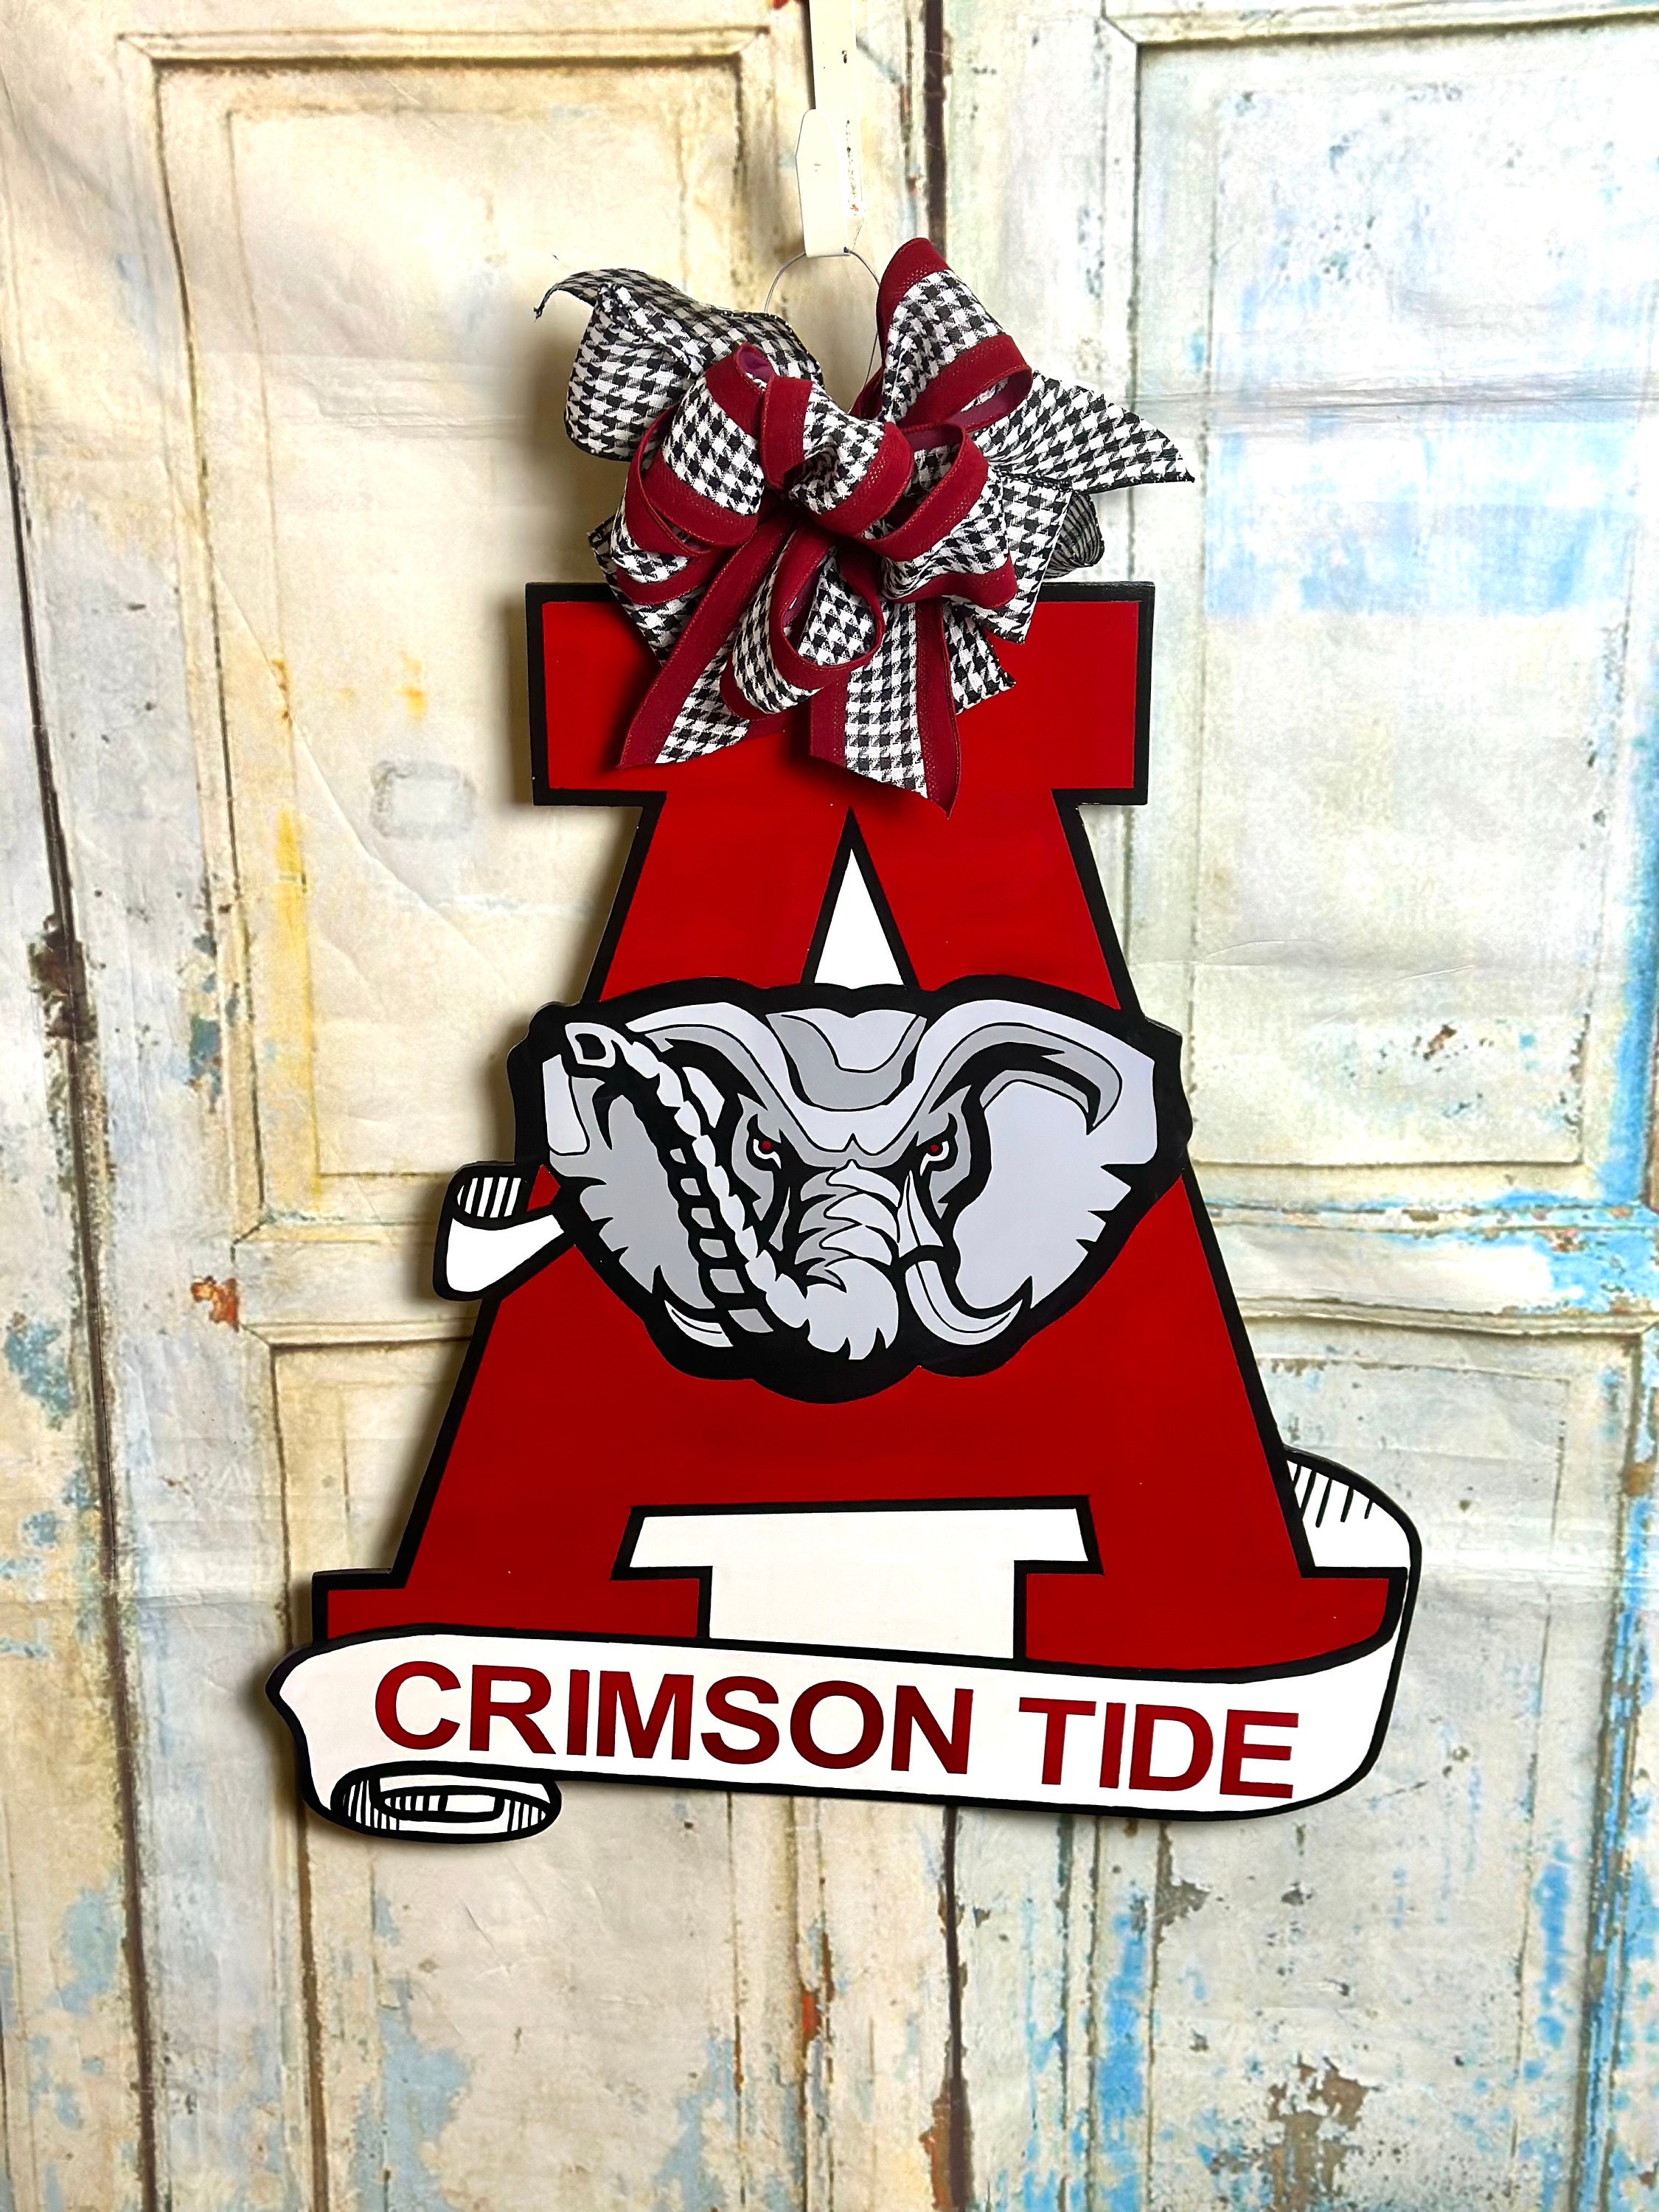 Alabama Crimson Tide Children's Natural Wooden Hangers